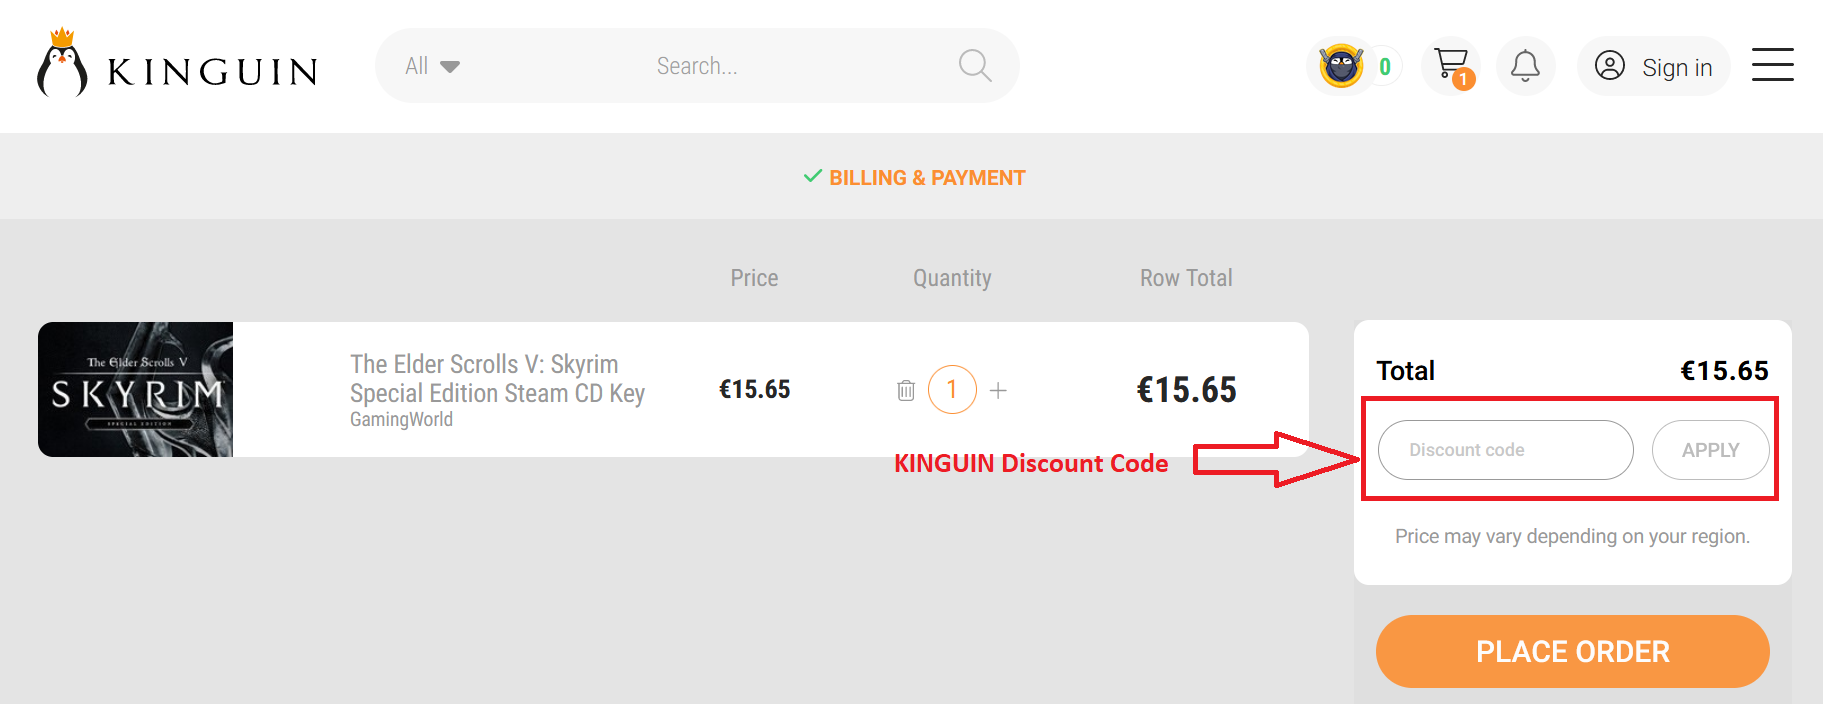 kinguin discount code for windows 10 pro key